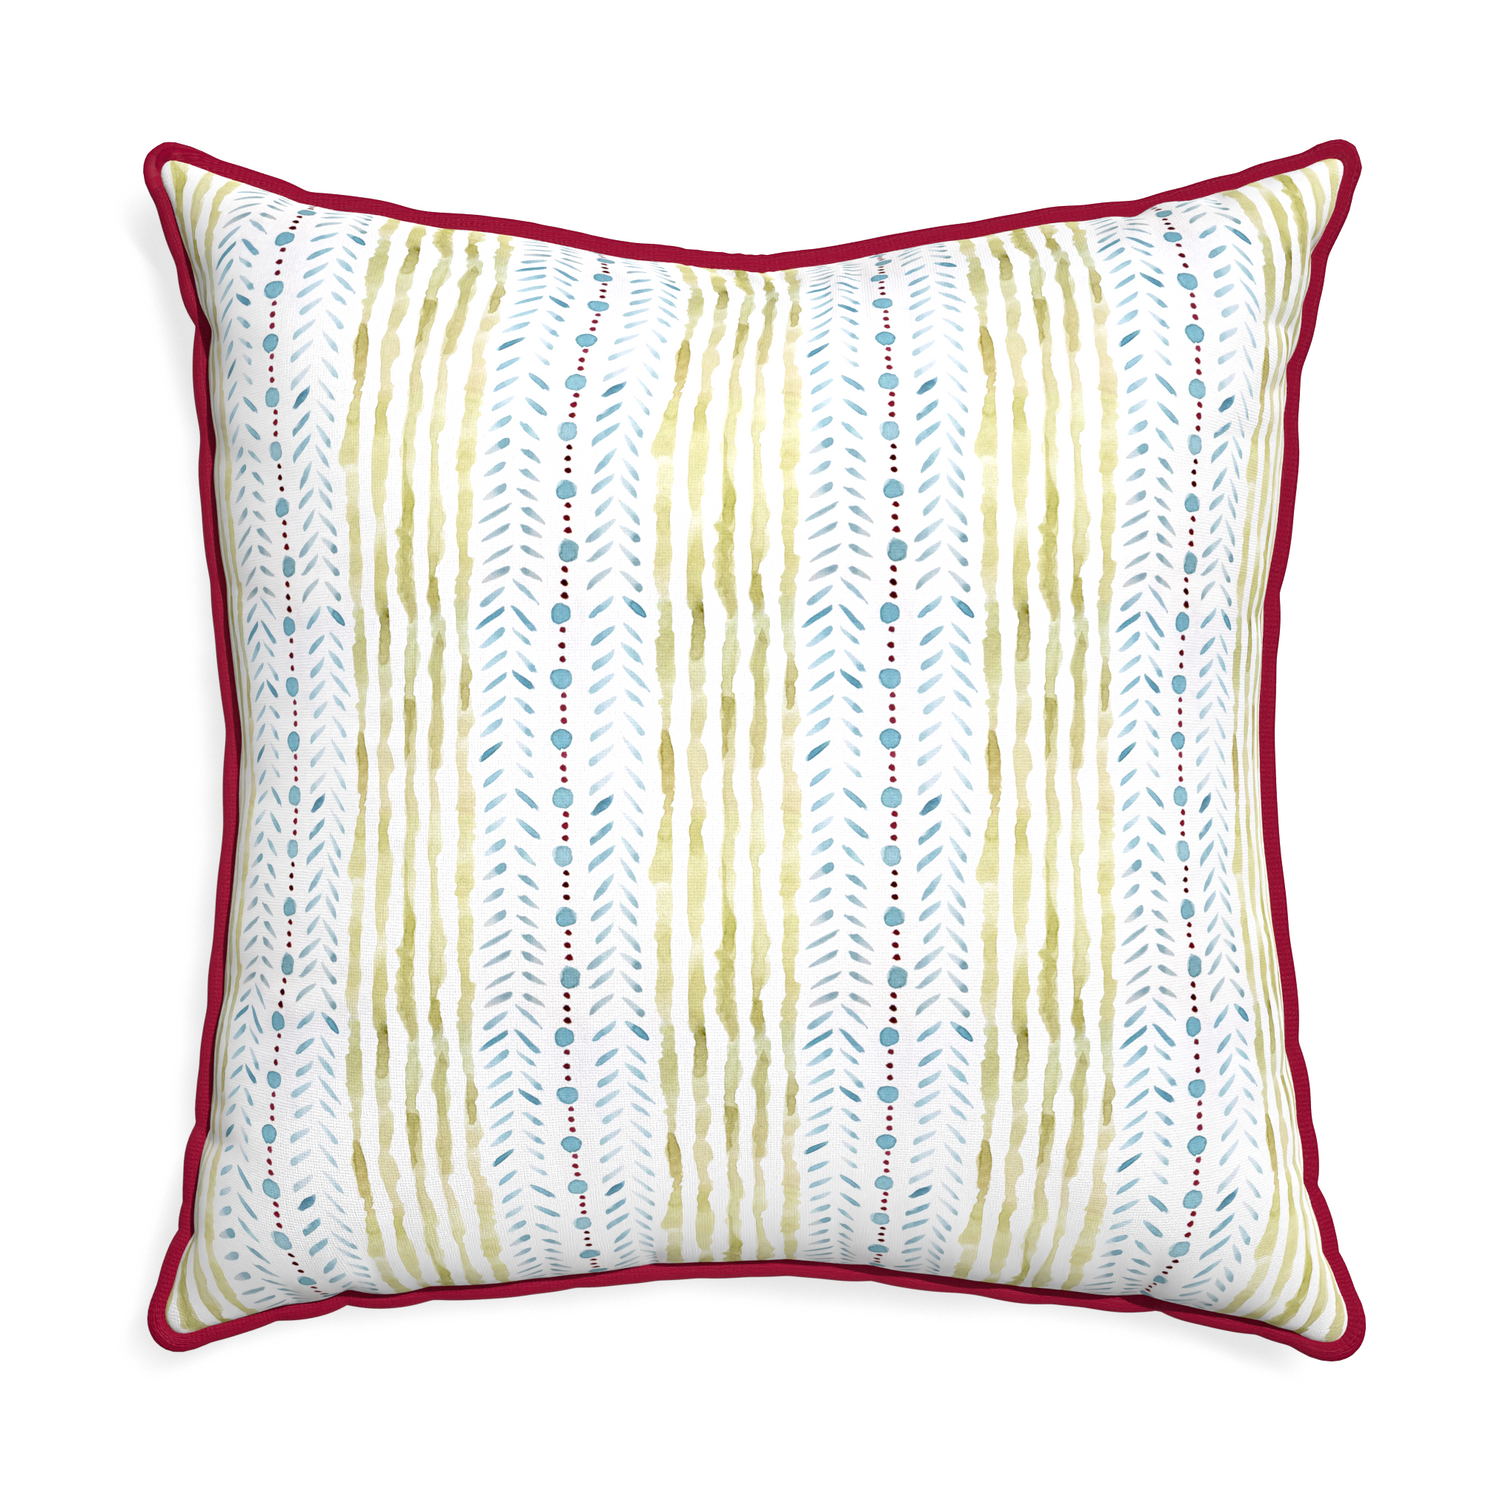 Euro-sham julia custom pillow with raspberry piping on white background